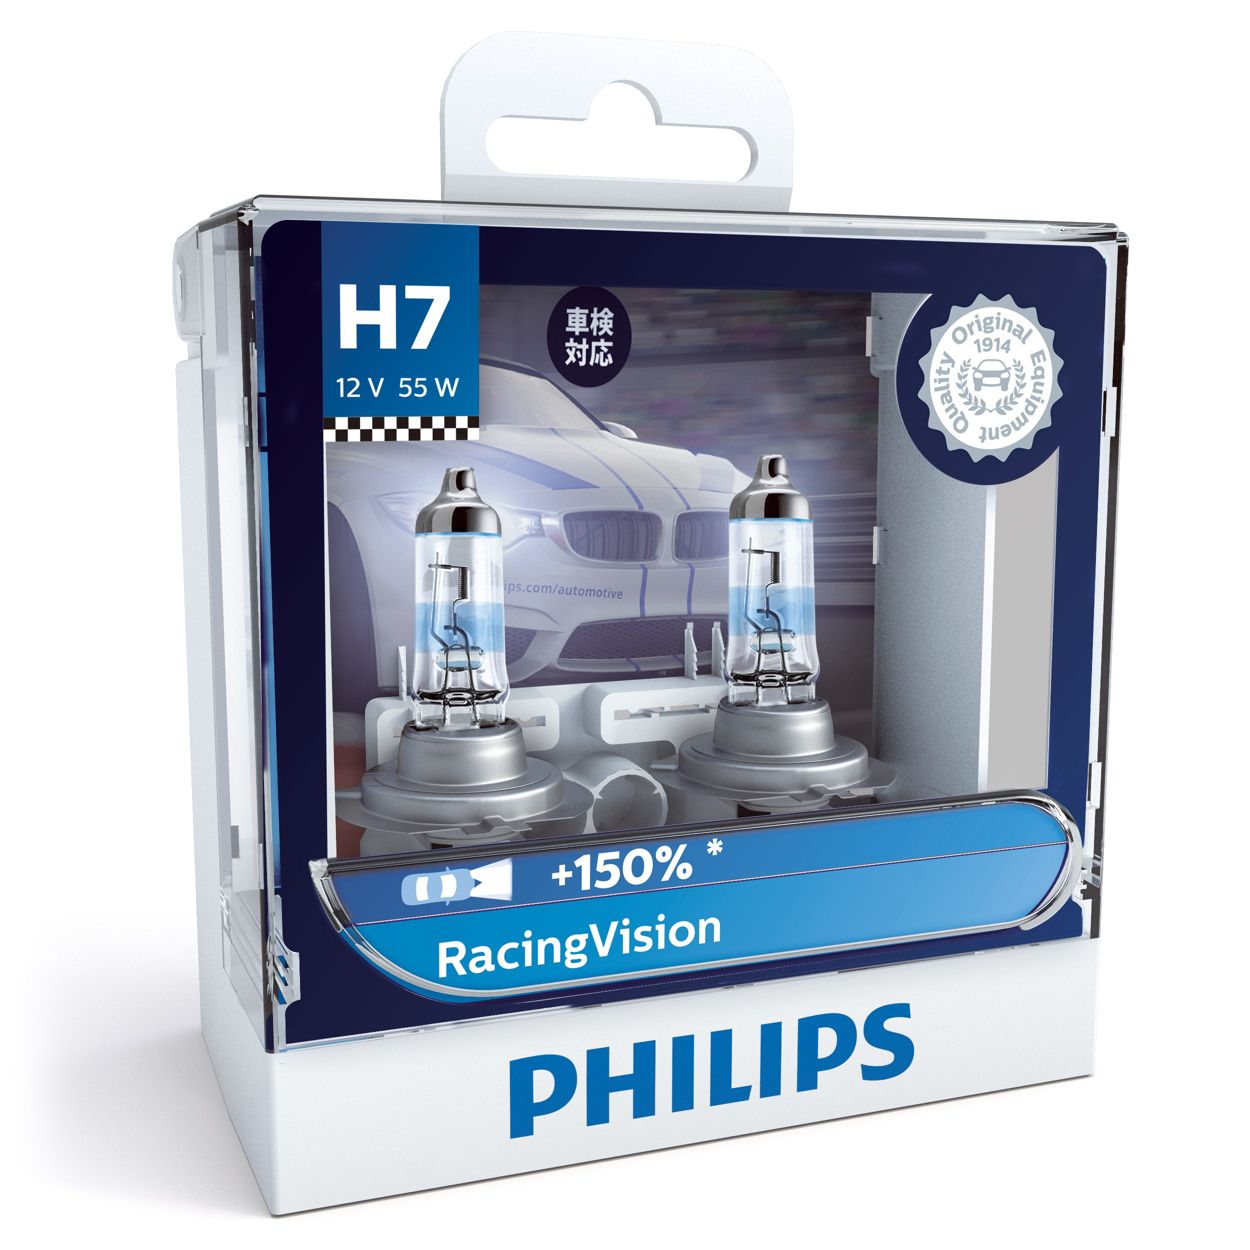 9005 Philips 9005CVPS2 CrystalVision Platinum Halogen Bulbs – HID